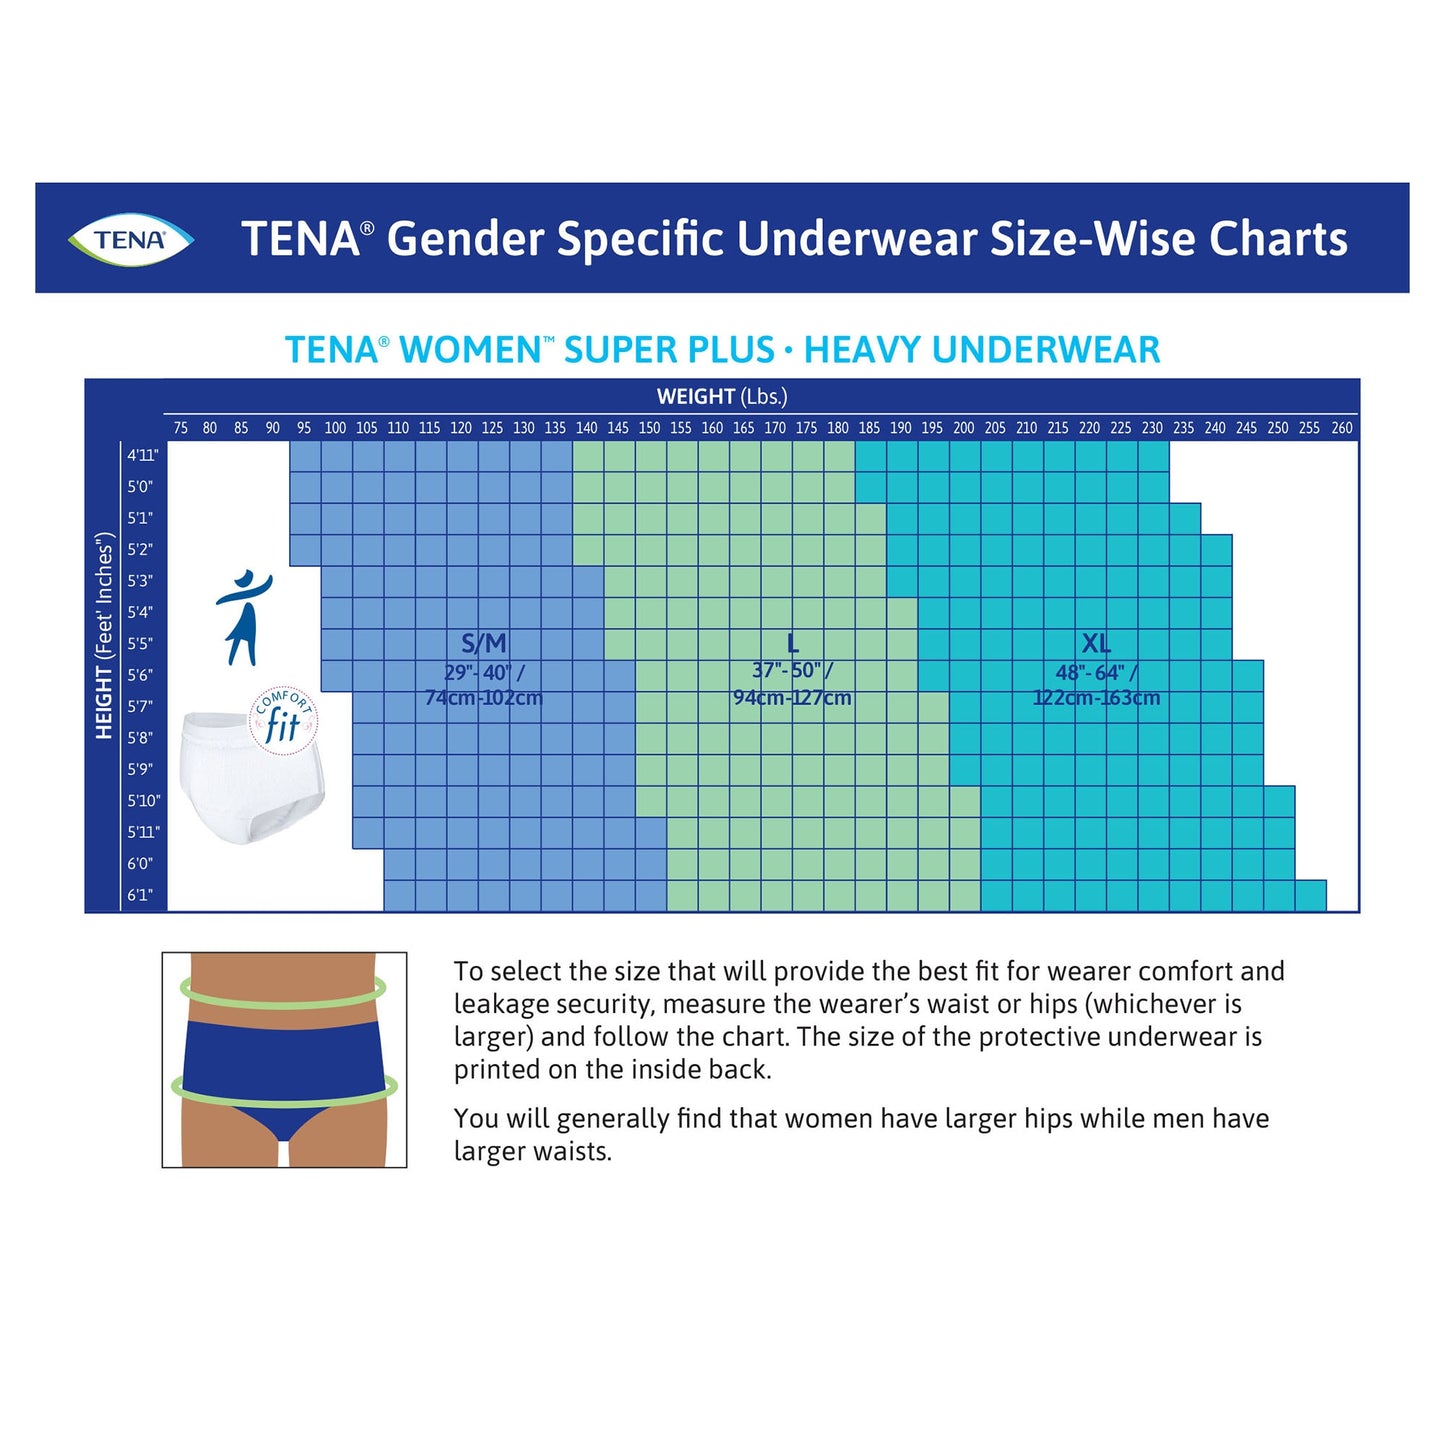 Tena ProSkin Maximum Absorbent Underwear, Extra Large - 73040